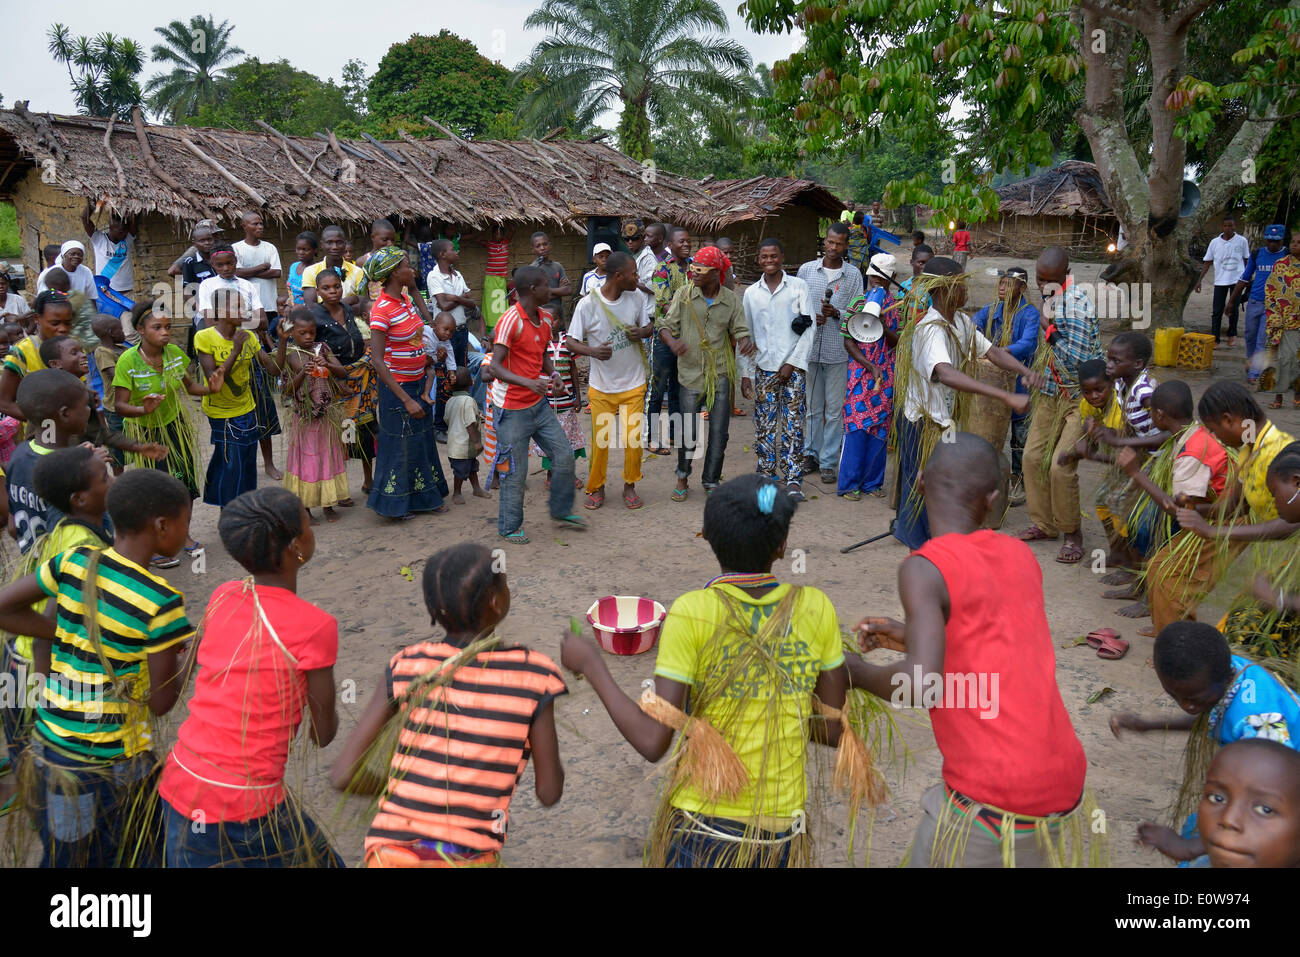 Dancing villagers at a village festival, Nkala, Bandundu Province, Democratic Republic of the Congo Stock Photo